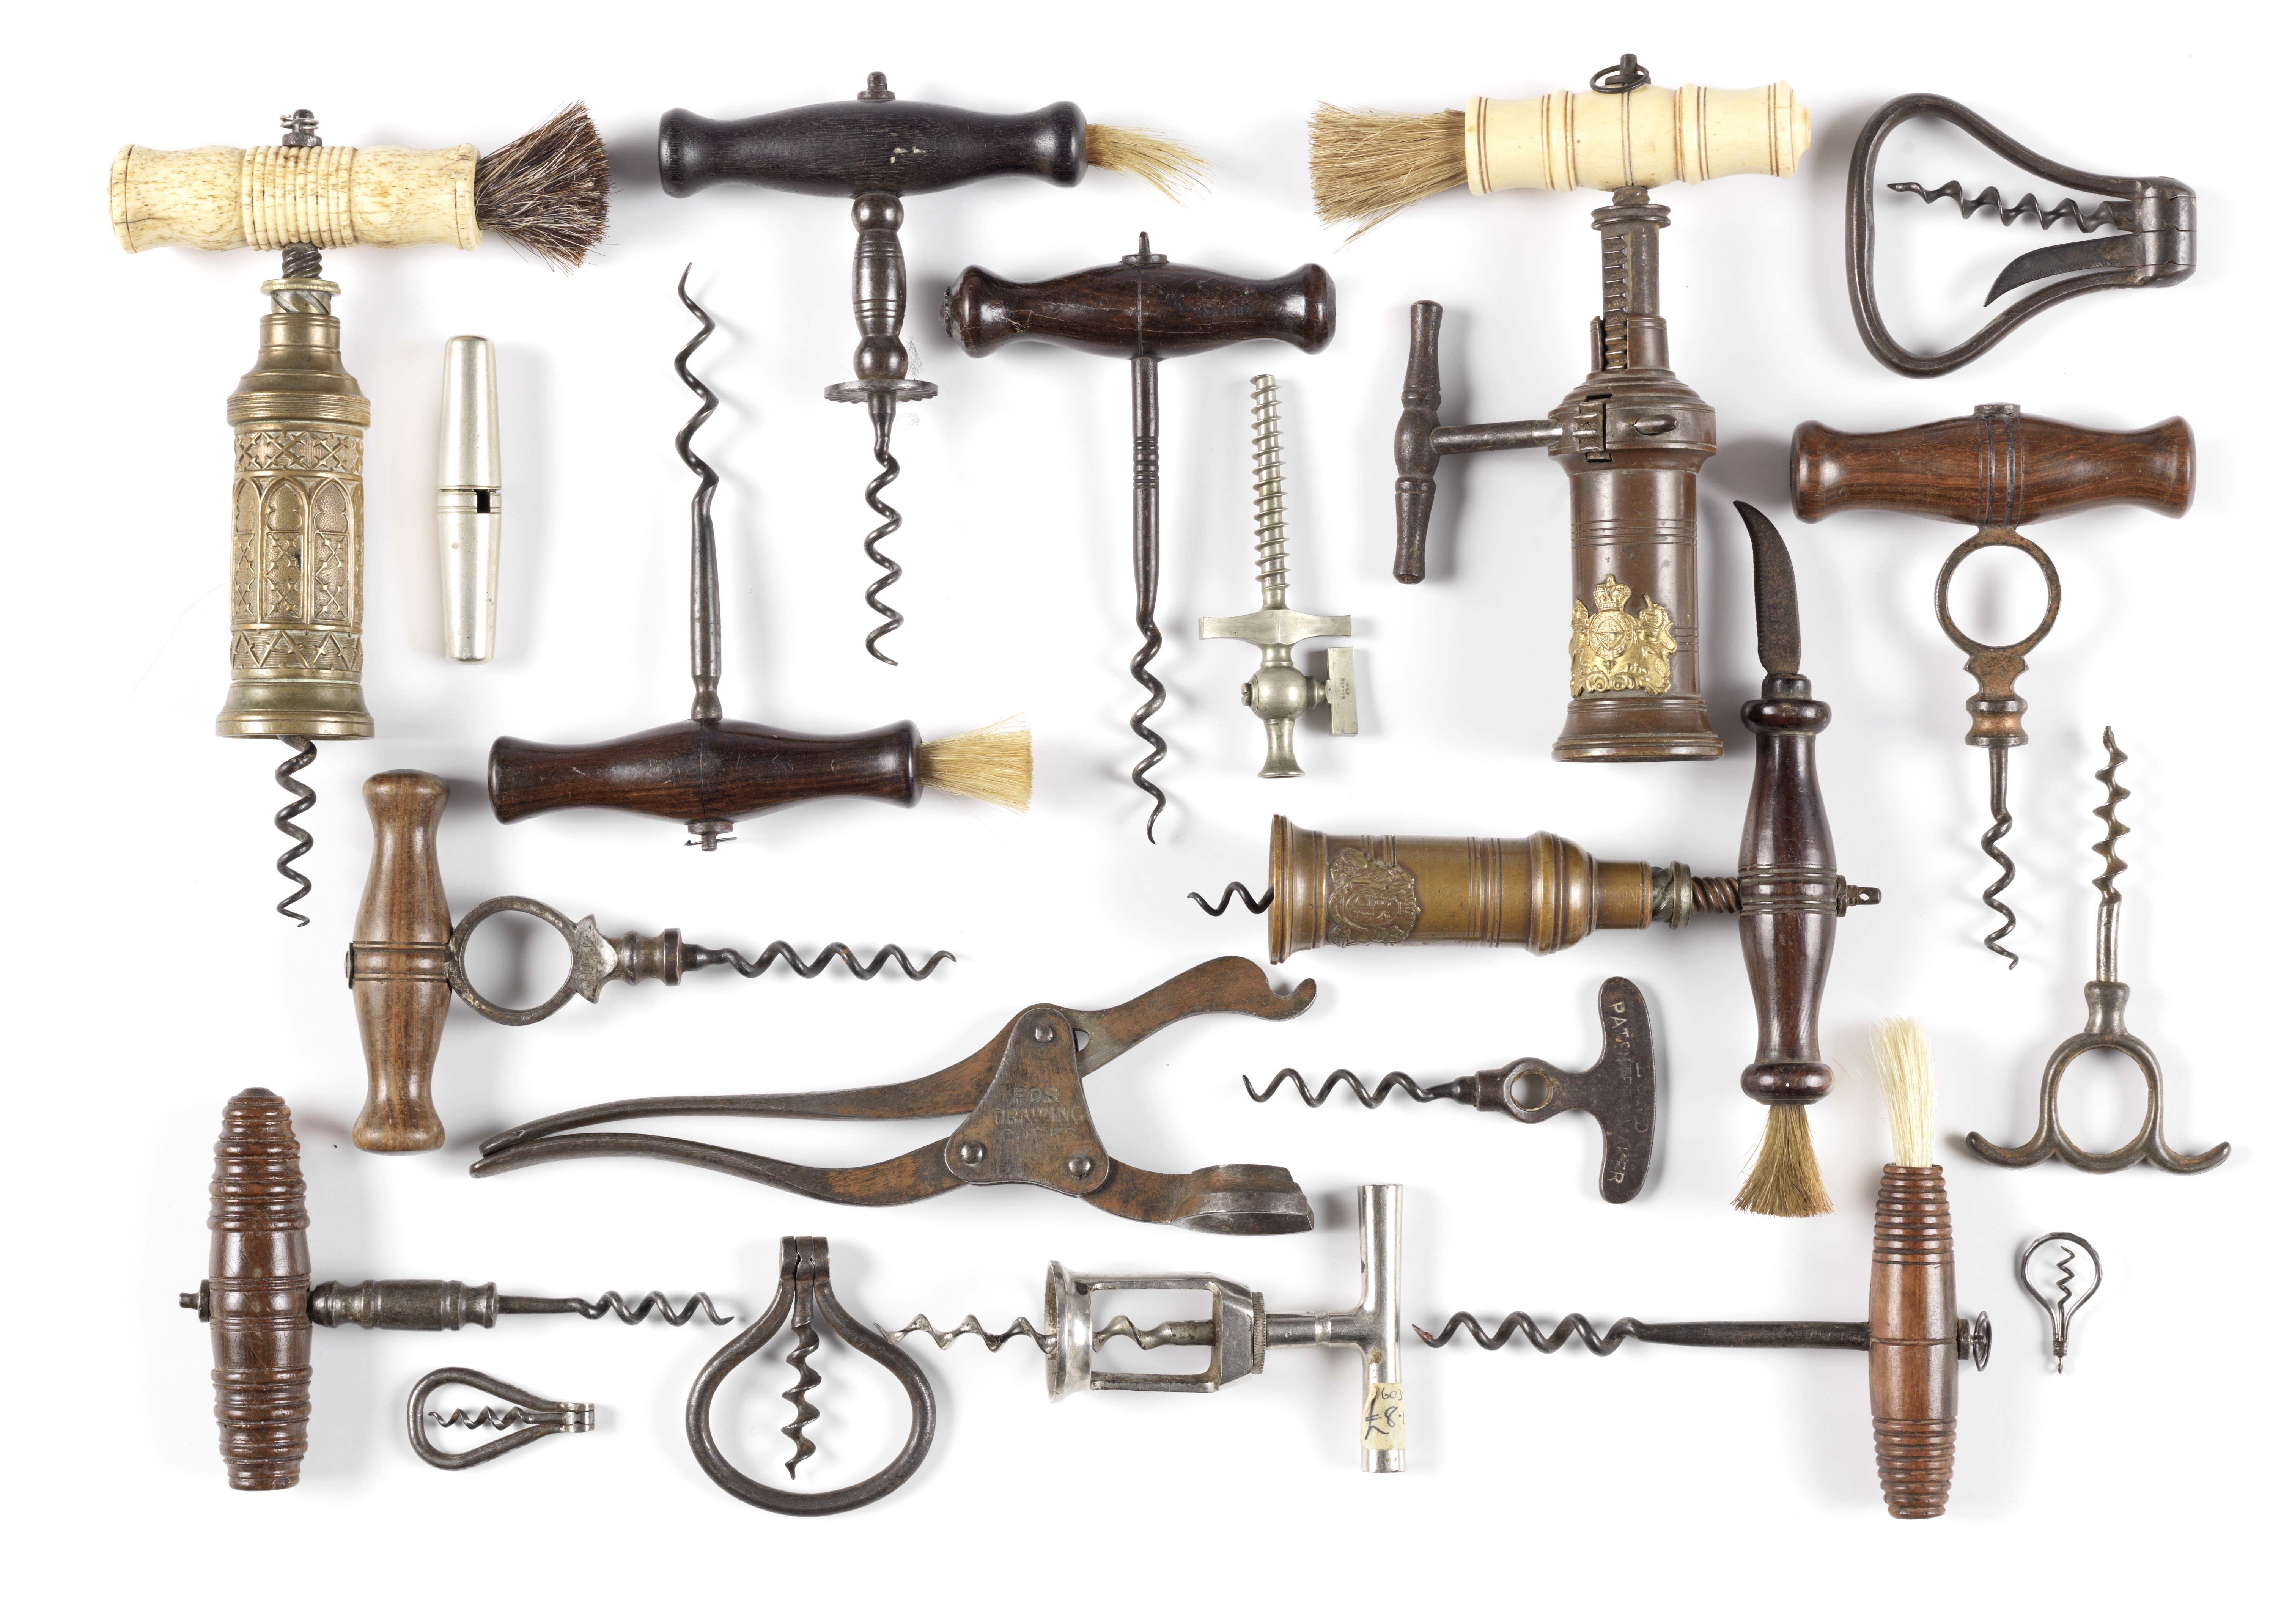 A collection of corkscrews (20)